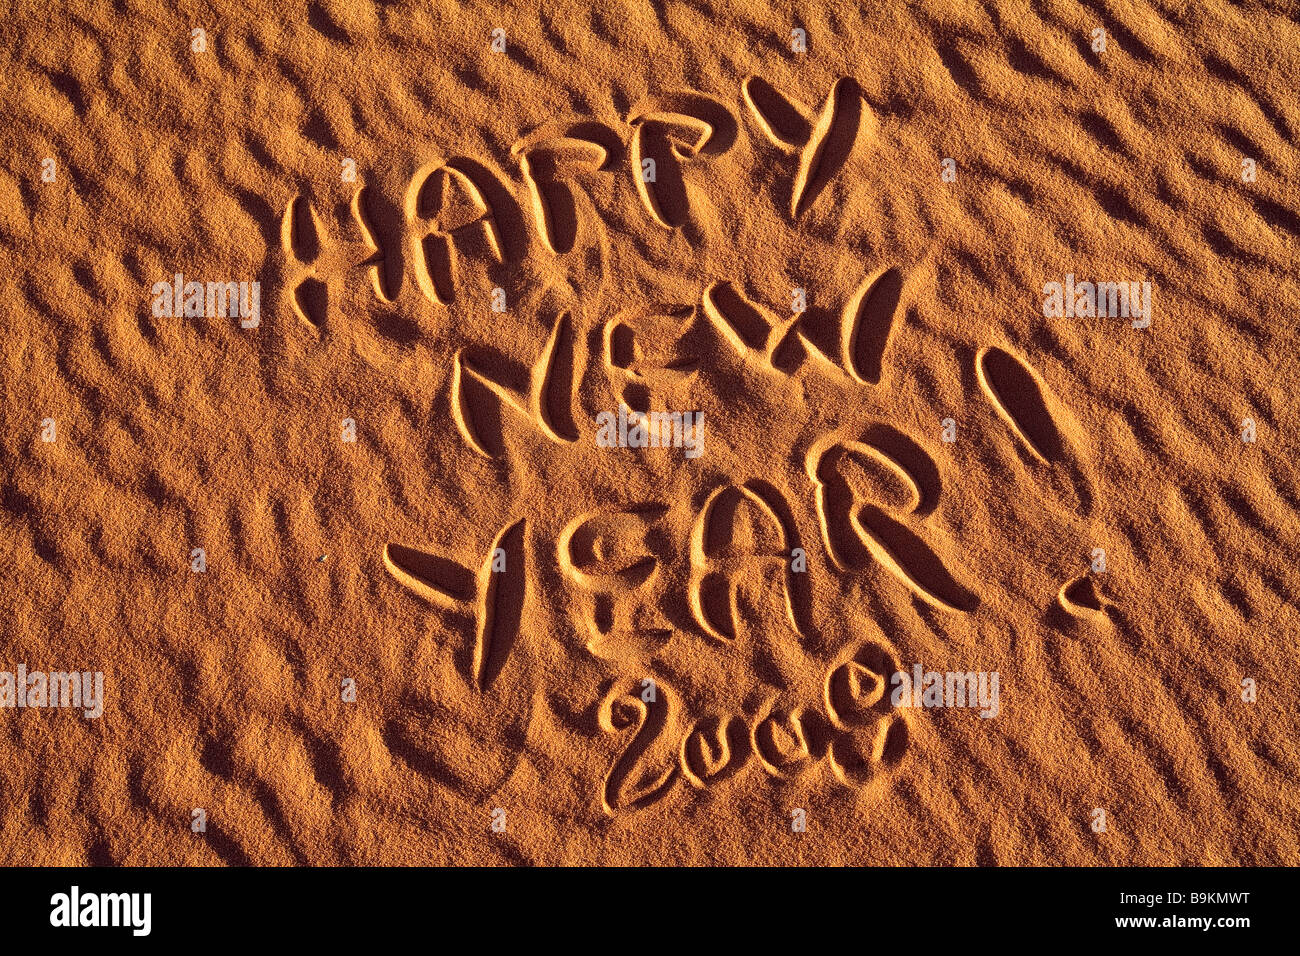 Mauritania, Adrar, Happy New Year 2008 written in the sand Stock Photo